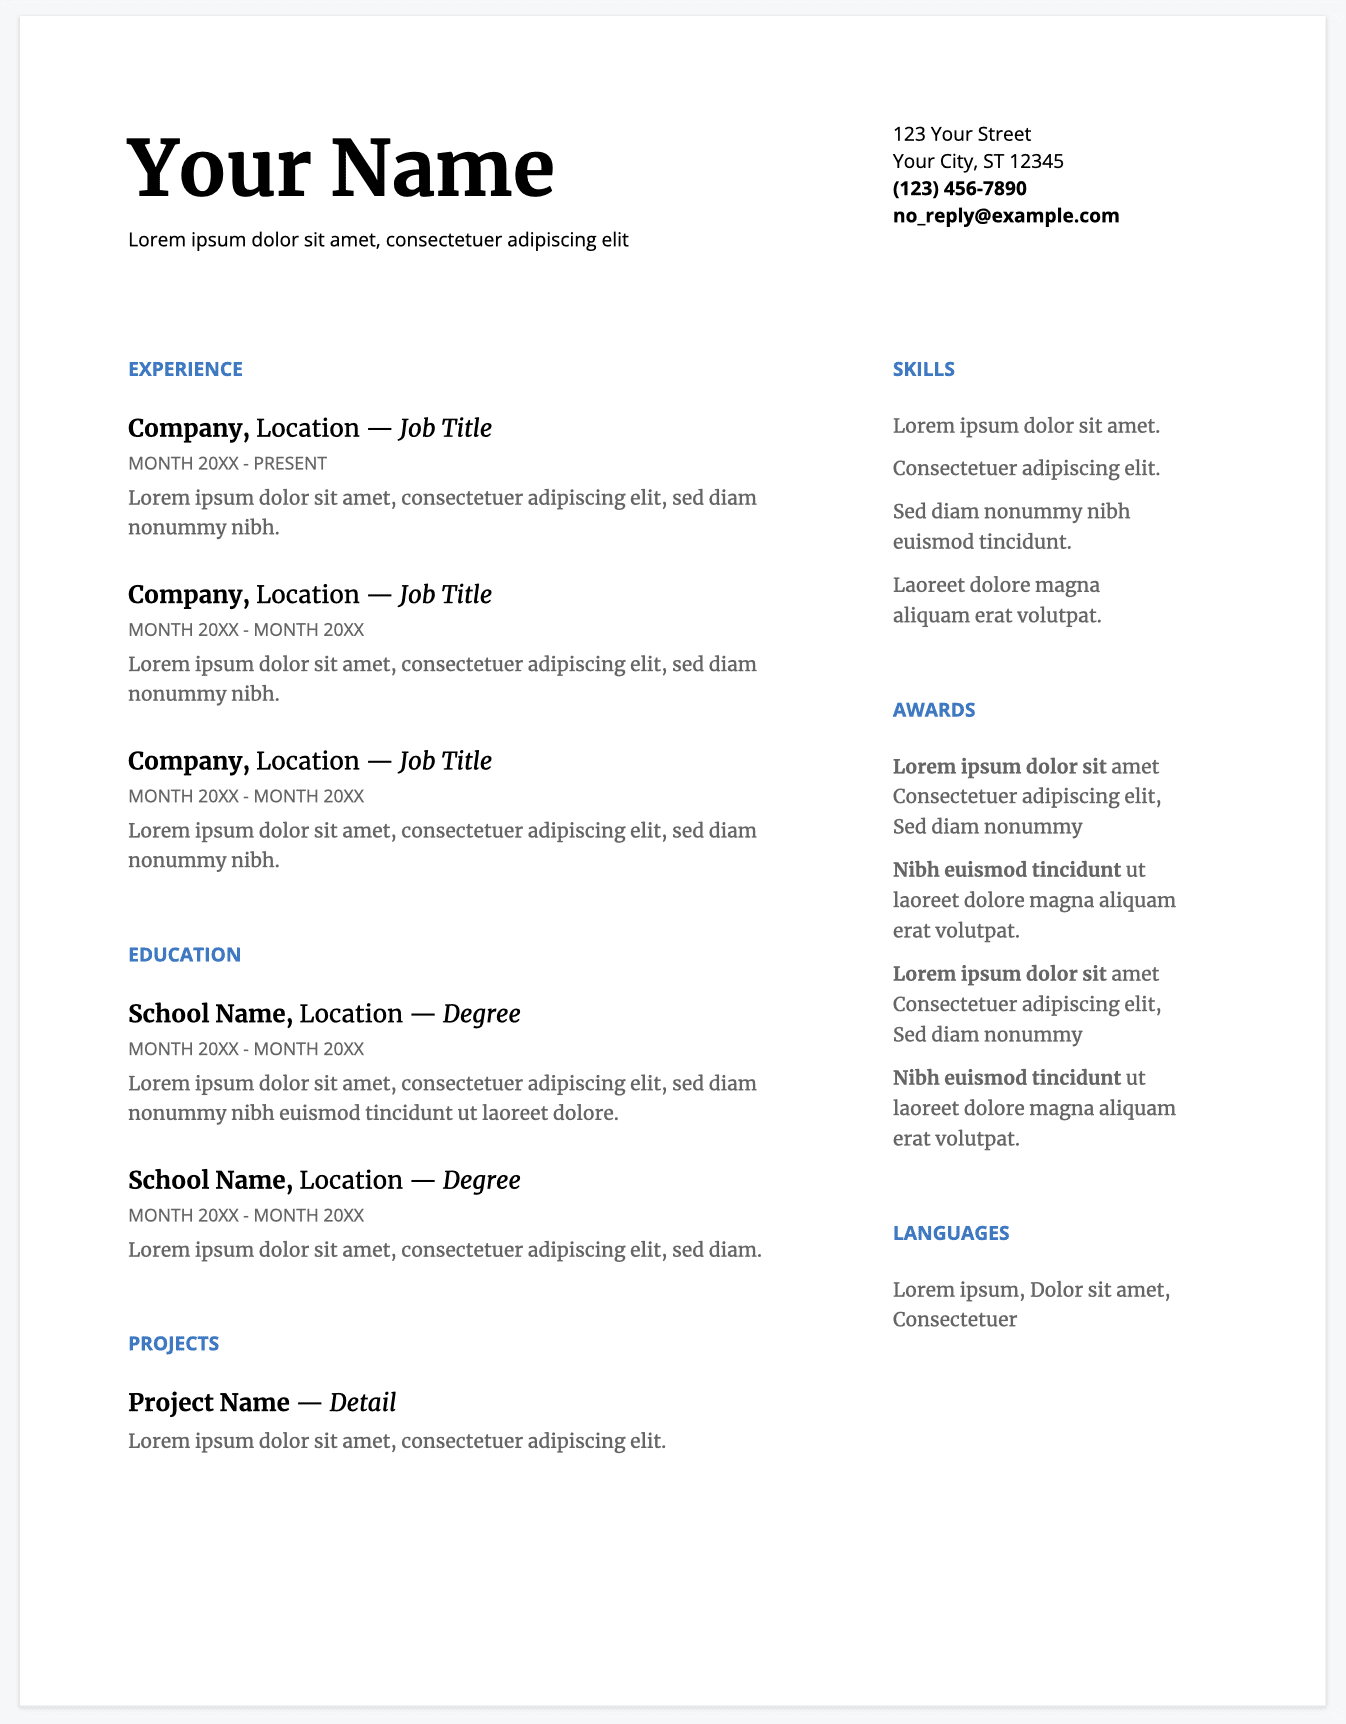 Serif resume template google docs